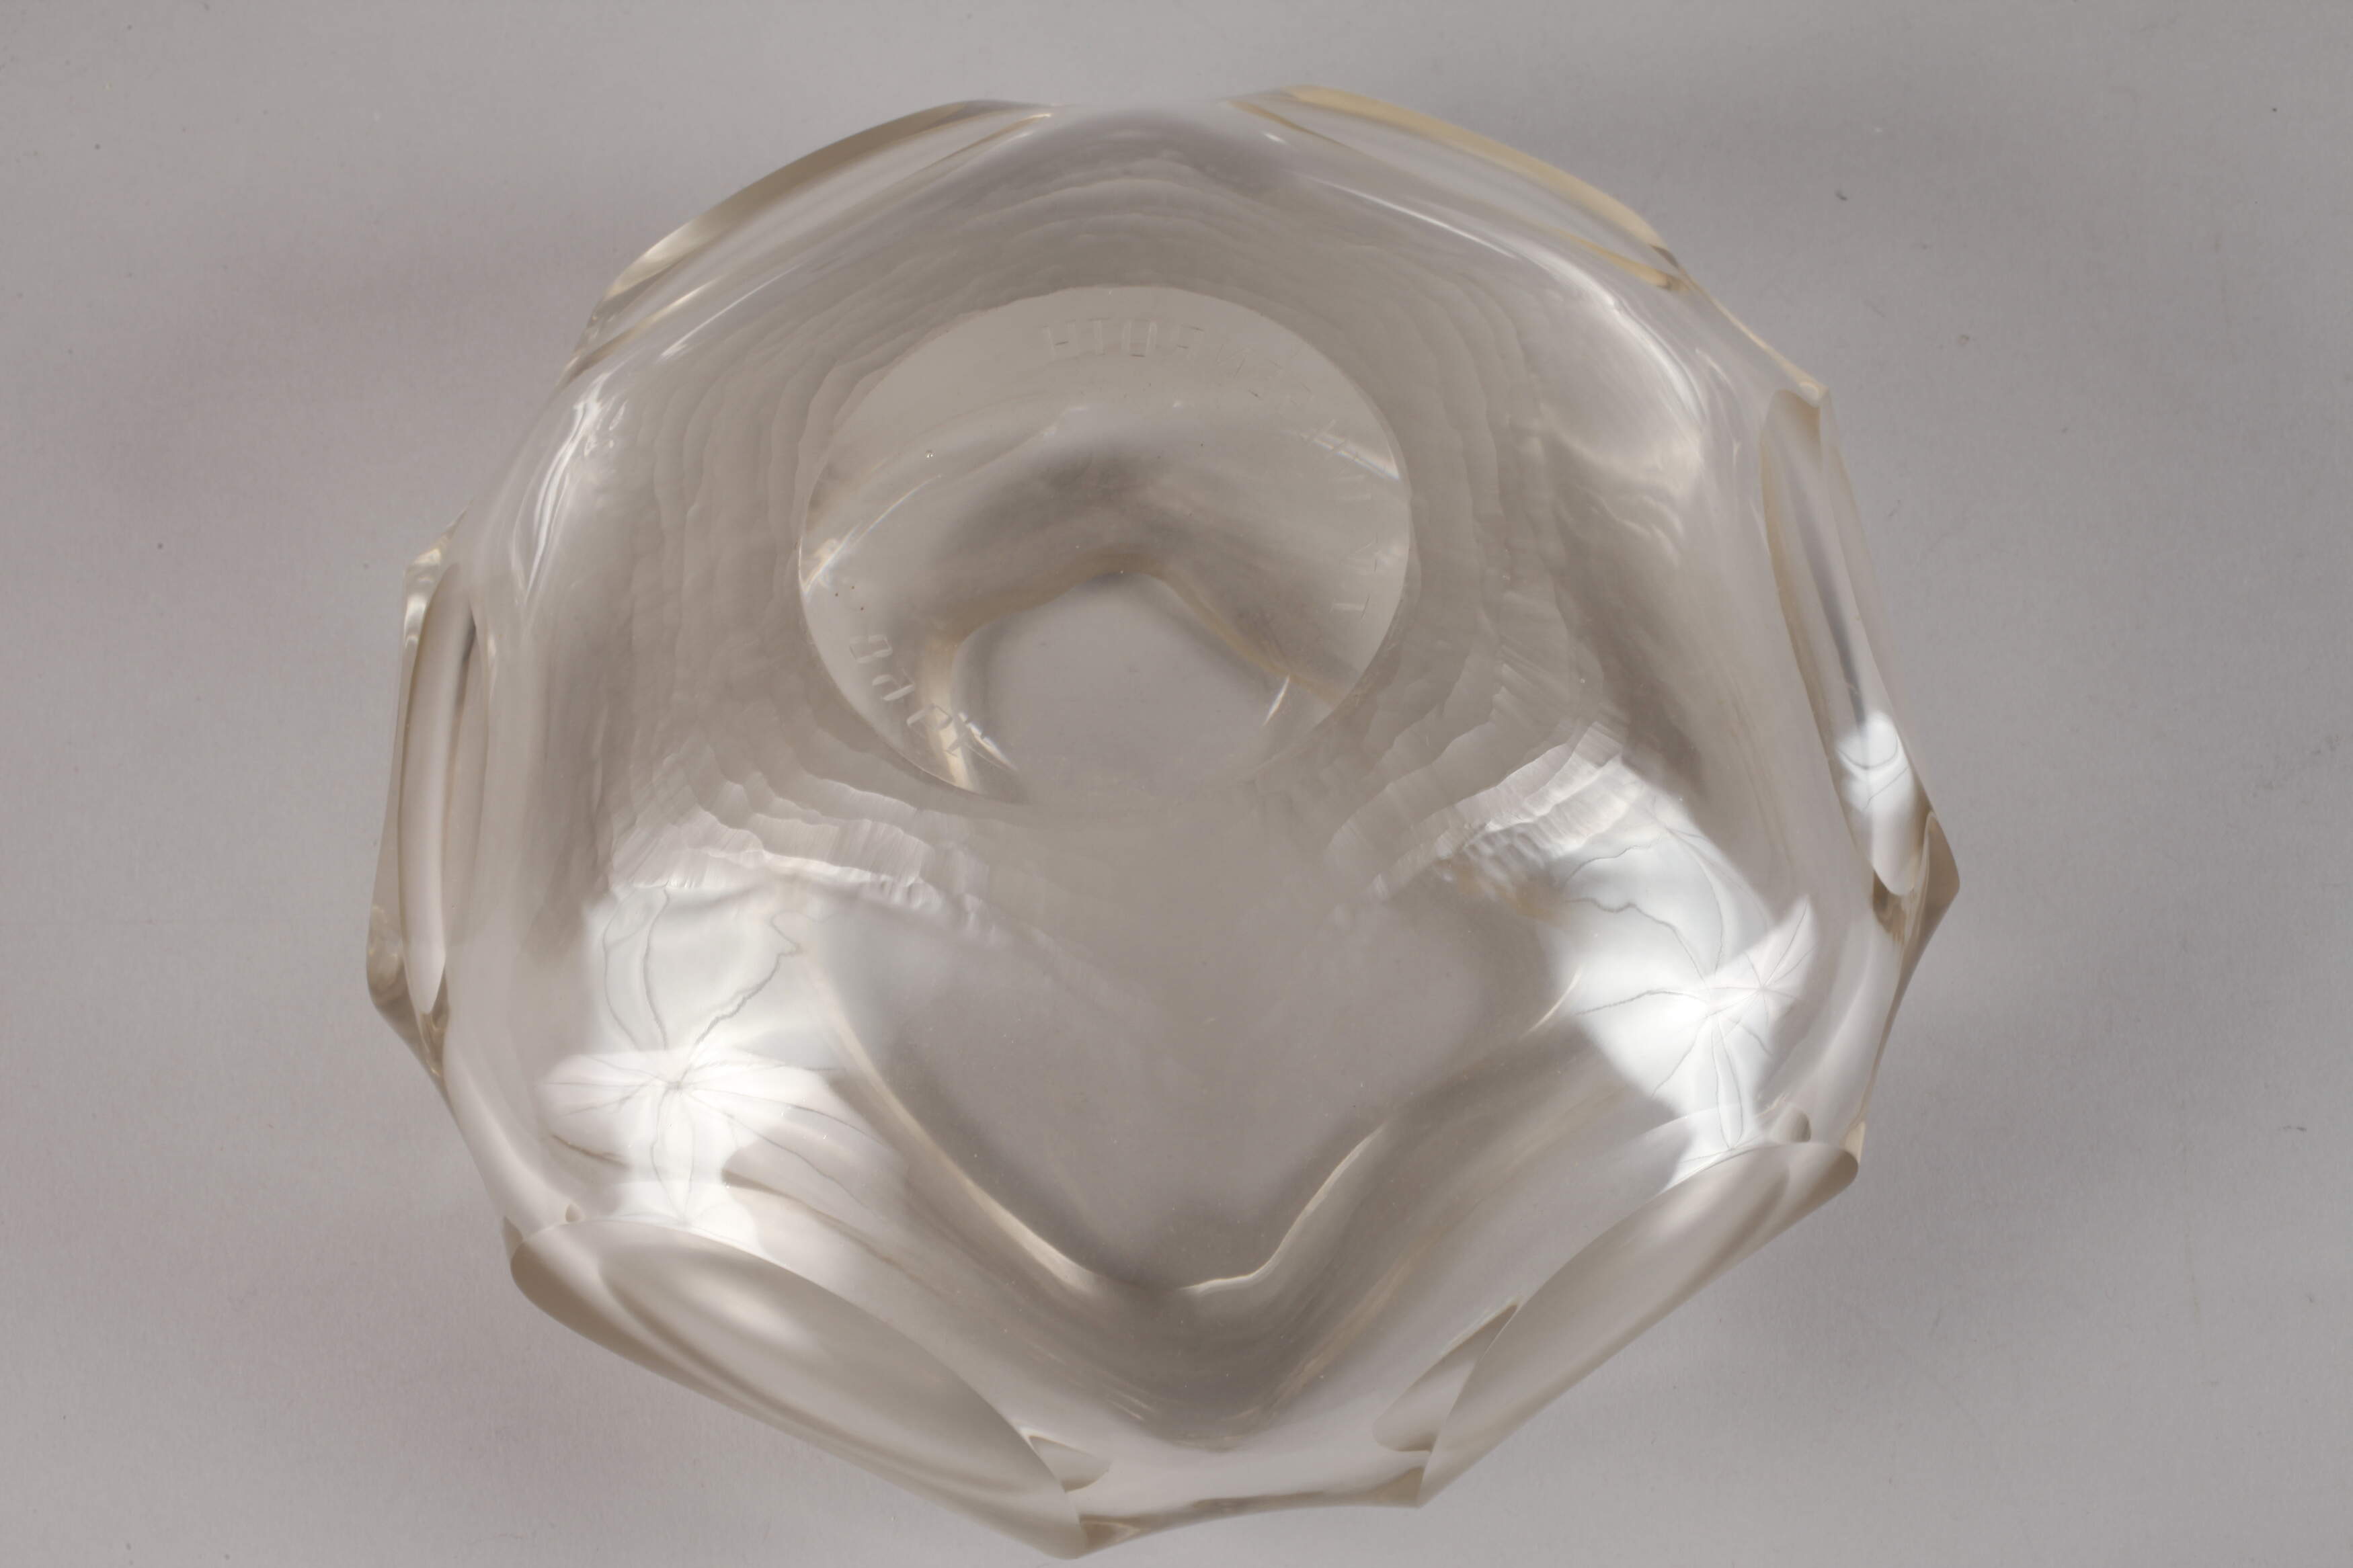 Staatliche Glasfachschule Hadamar bowl - Image 3 of 5